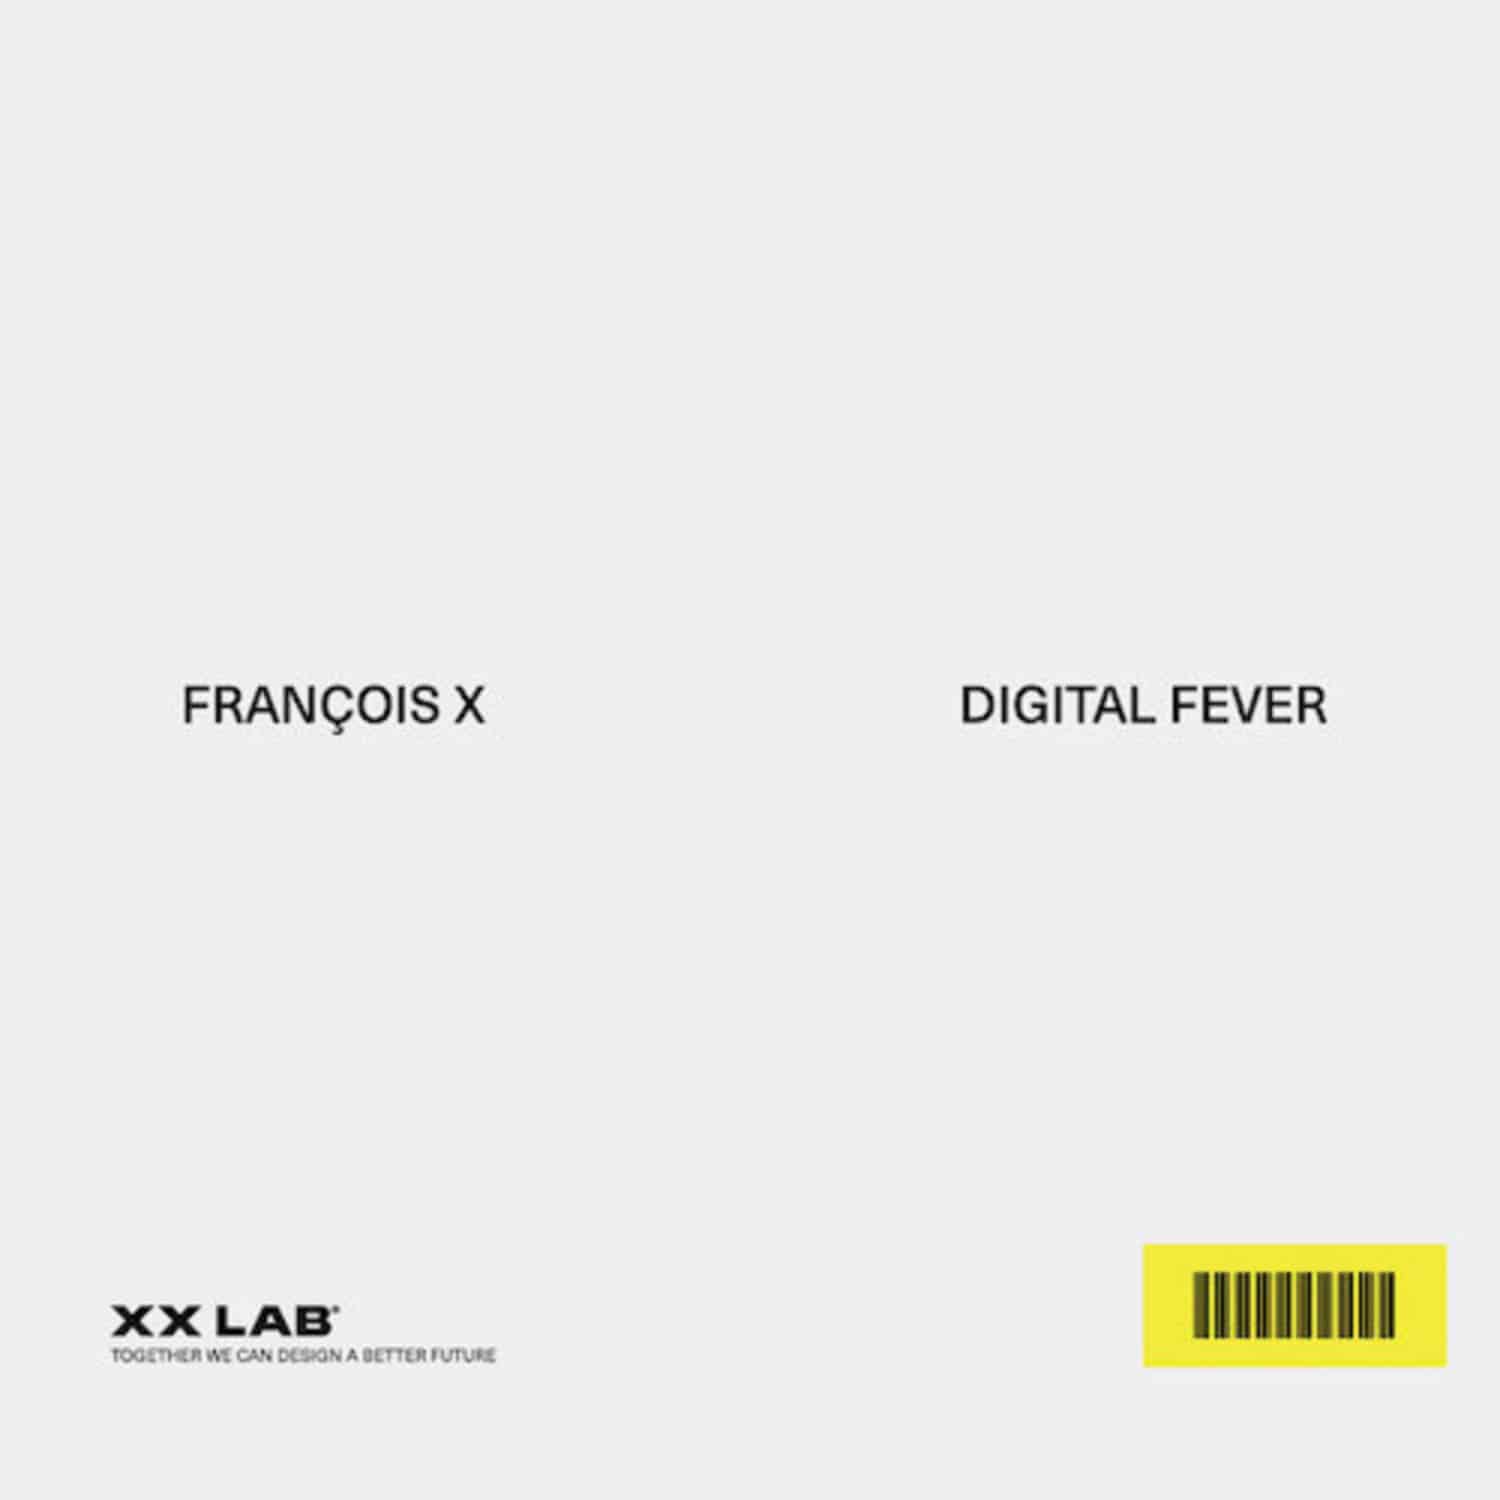 Francois X - DIGITAL FEVER